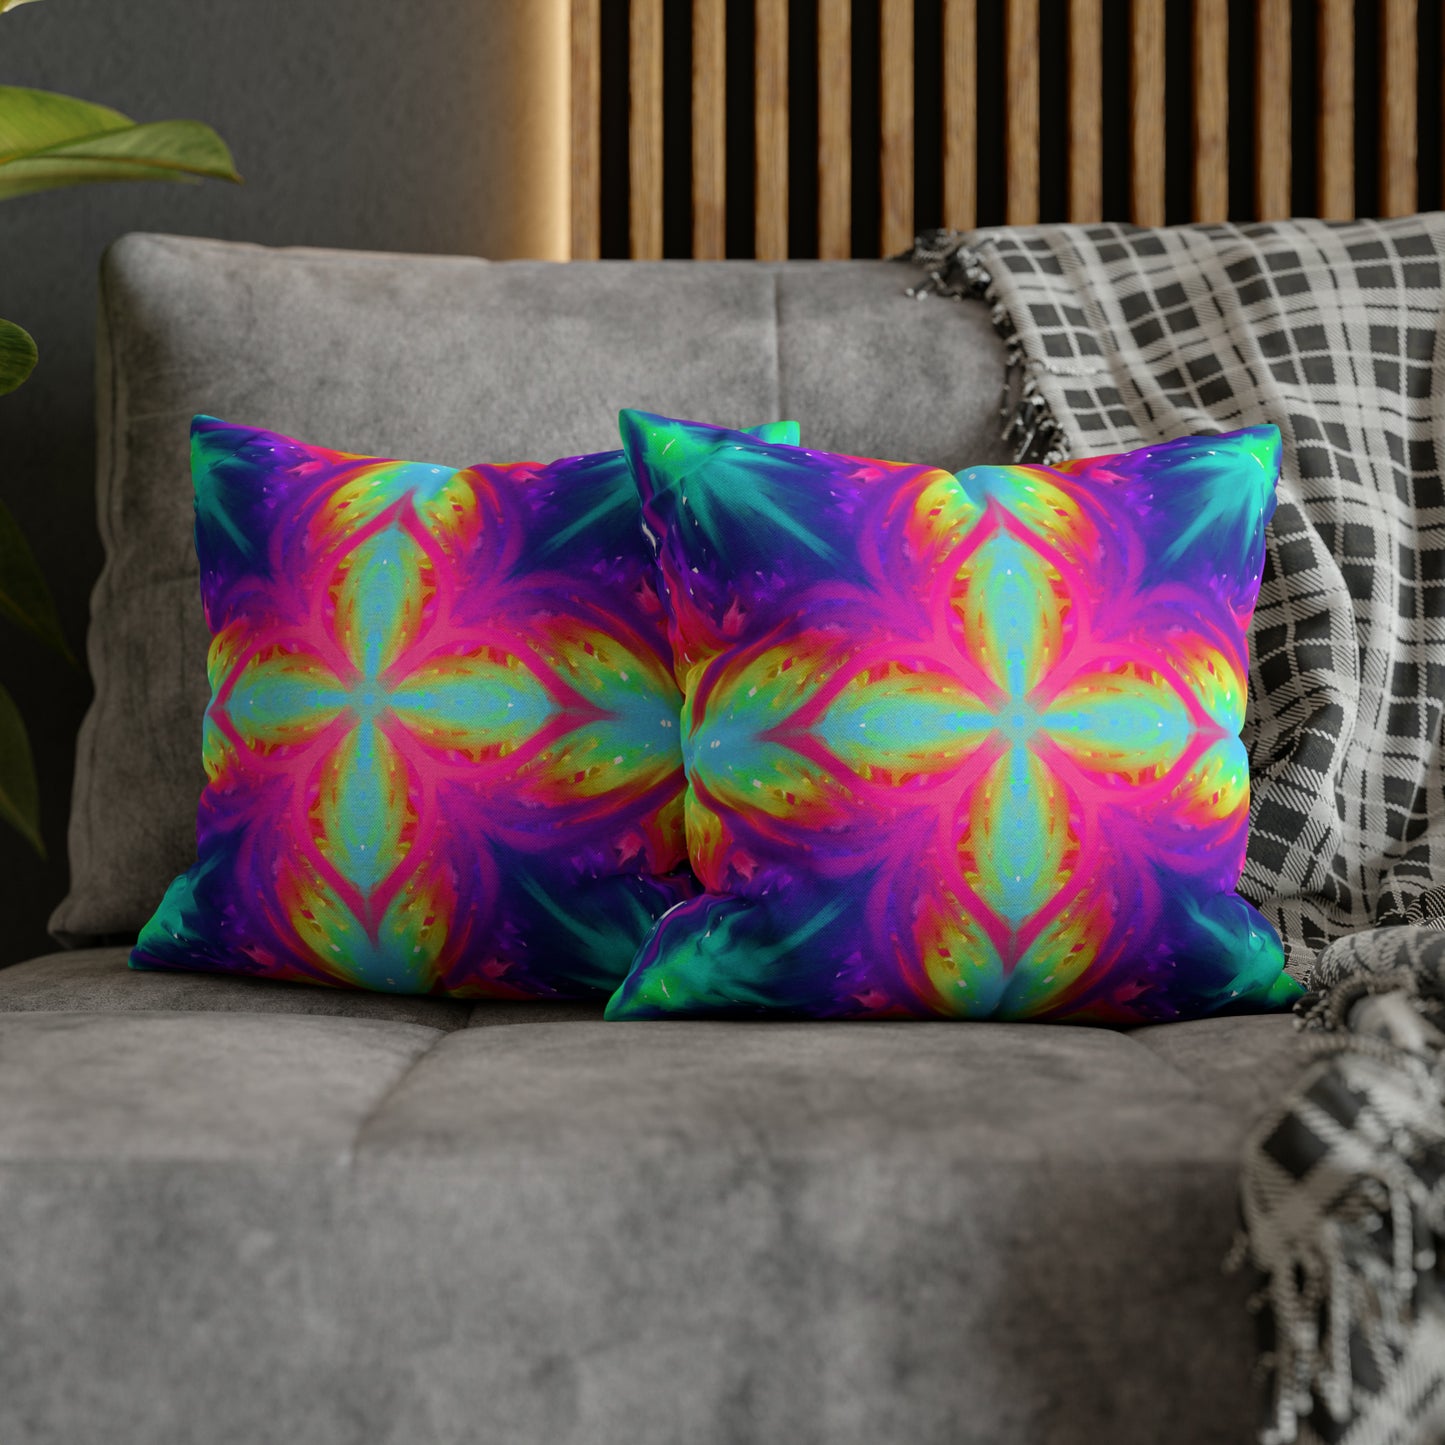 Rainbow Star Spun Polyester Square Pillow Case